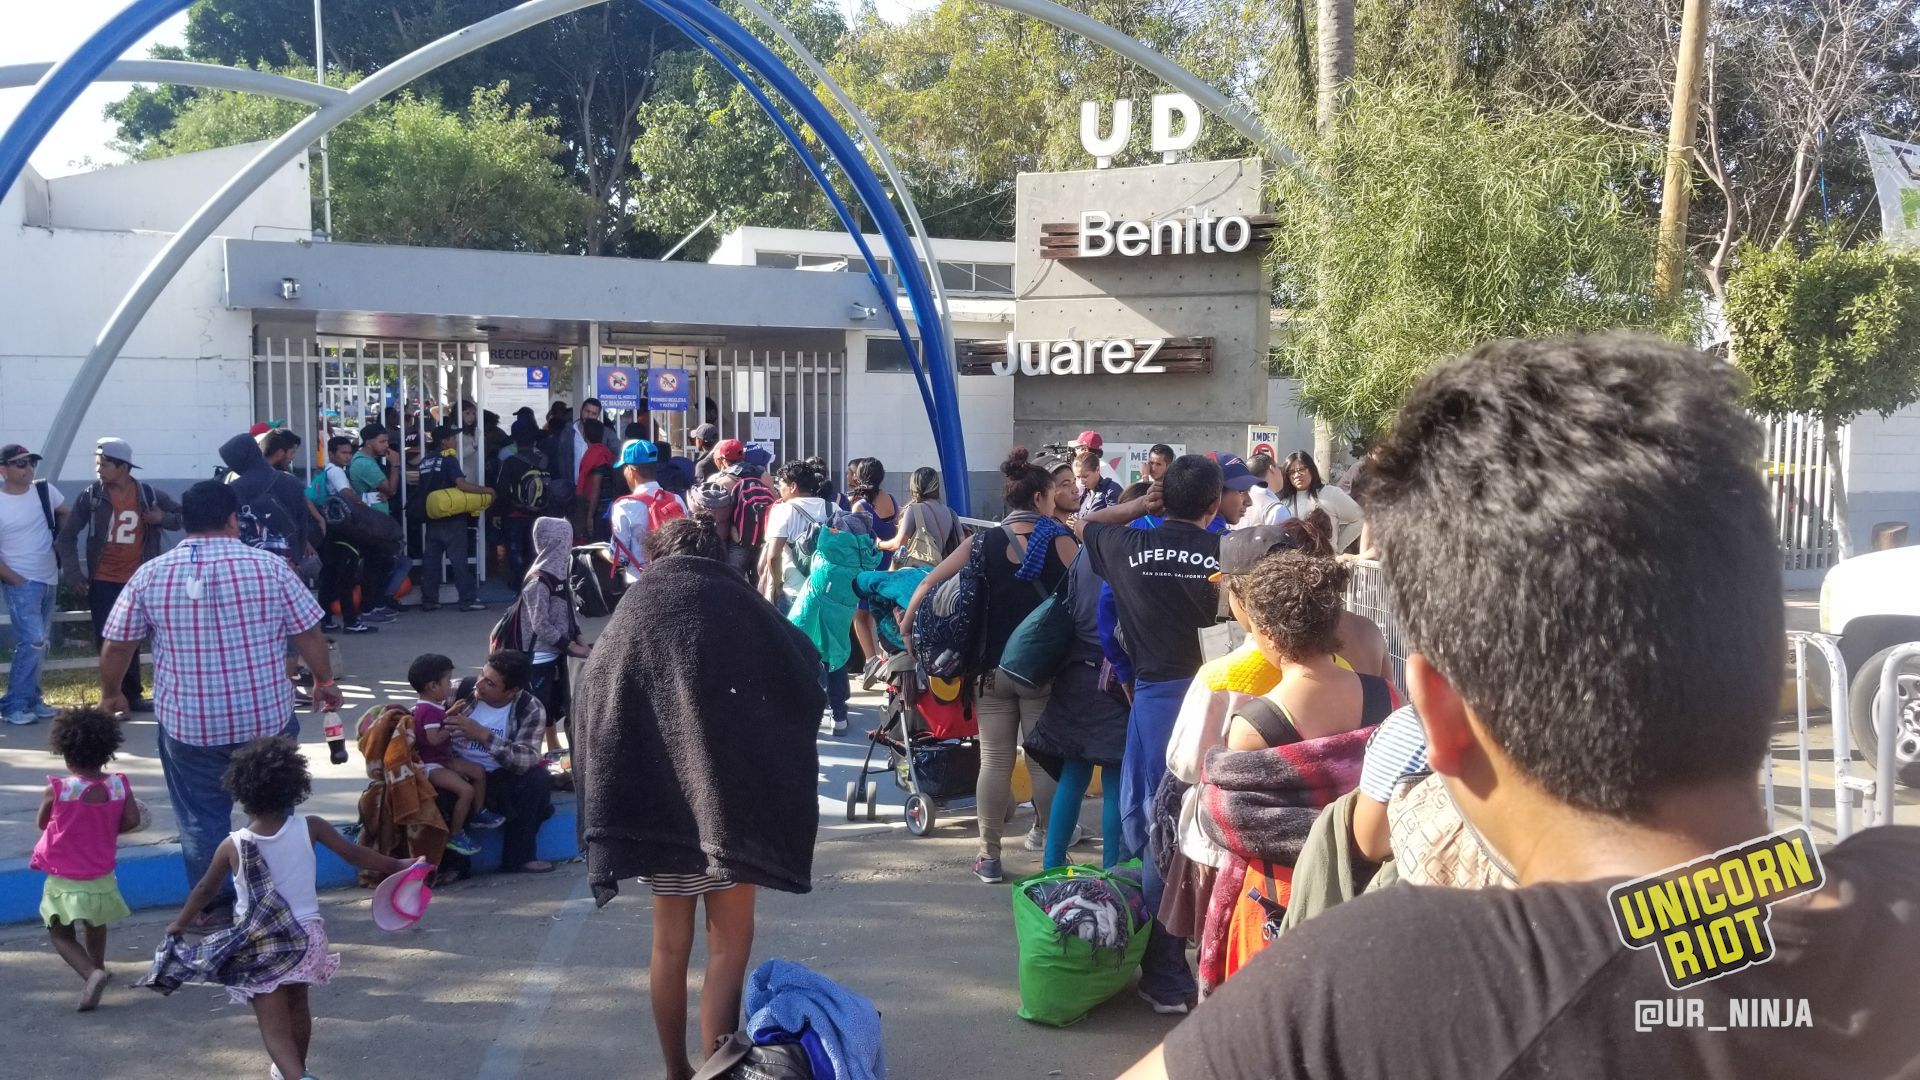 Benito Juarez Migrant center